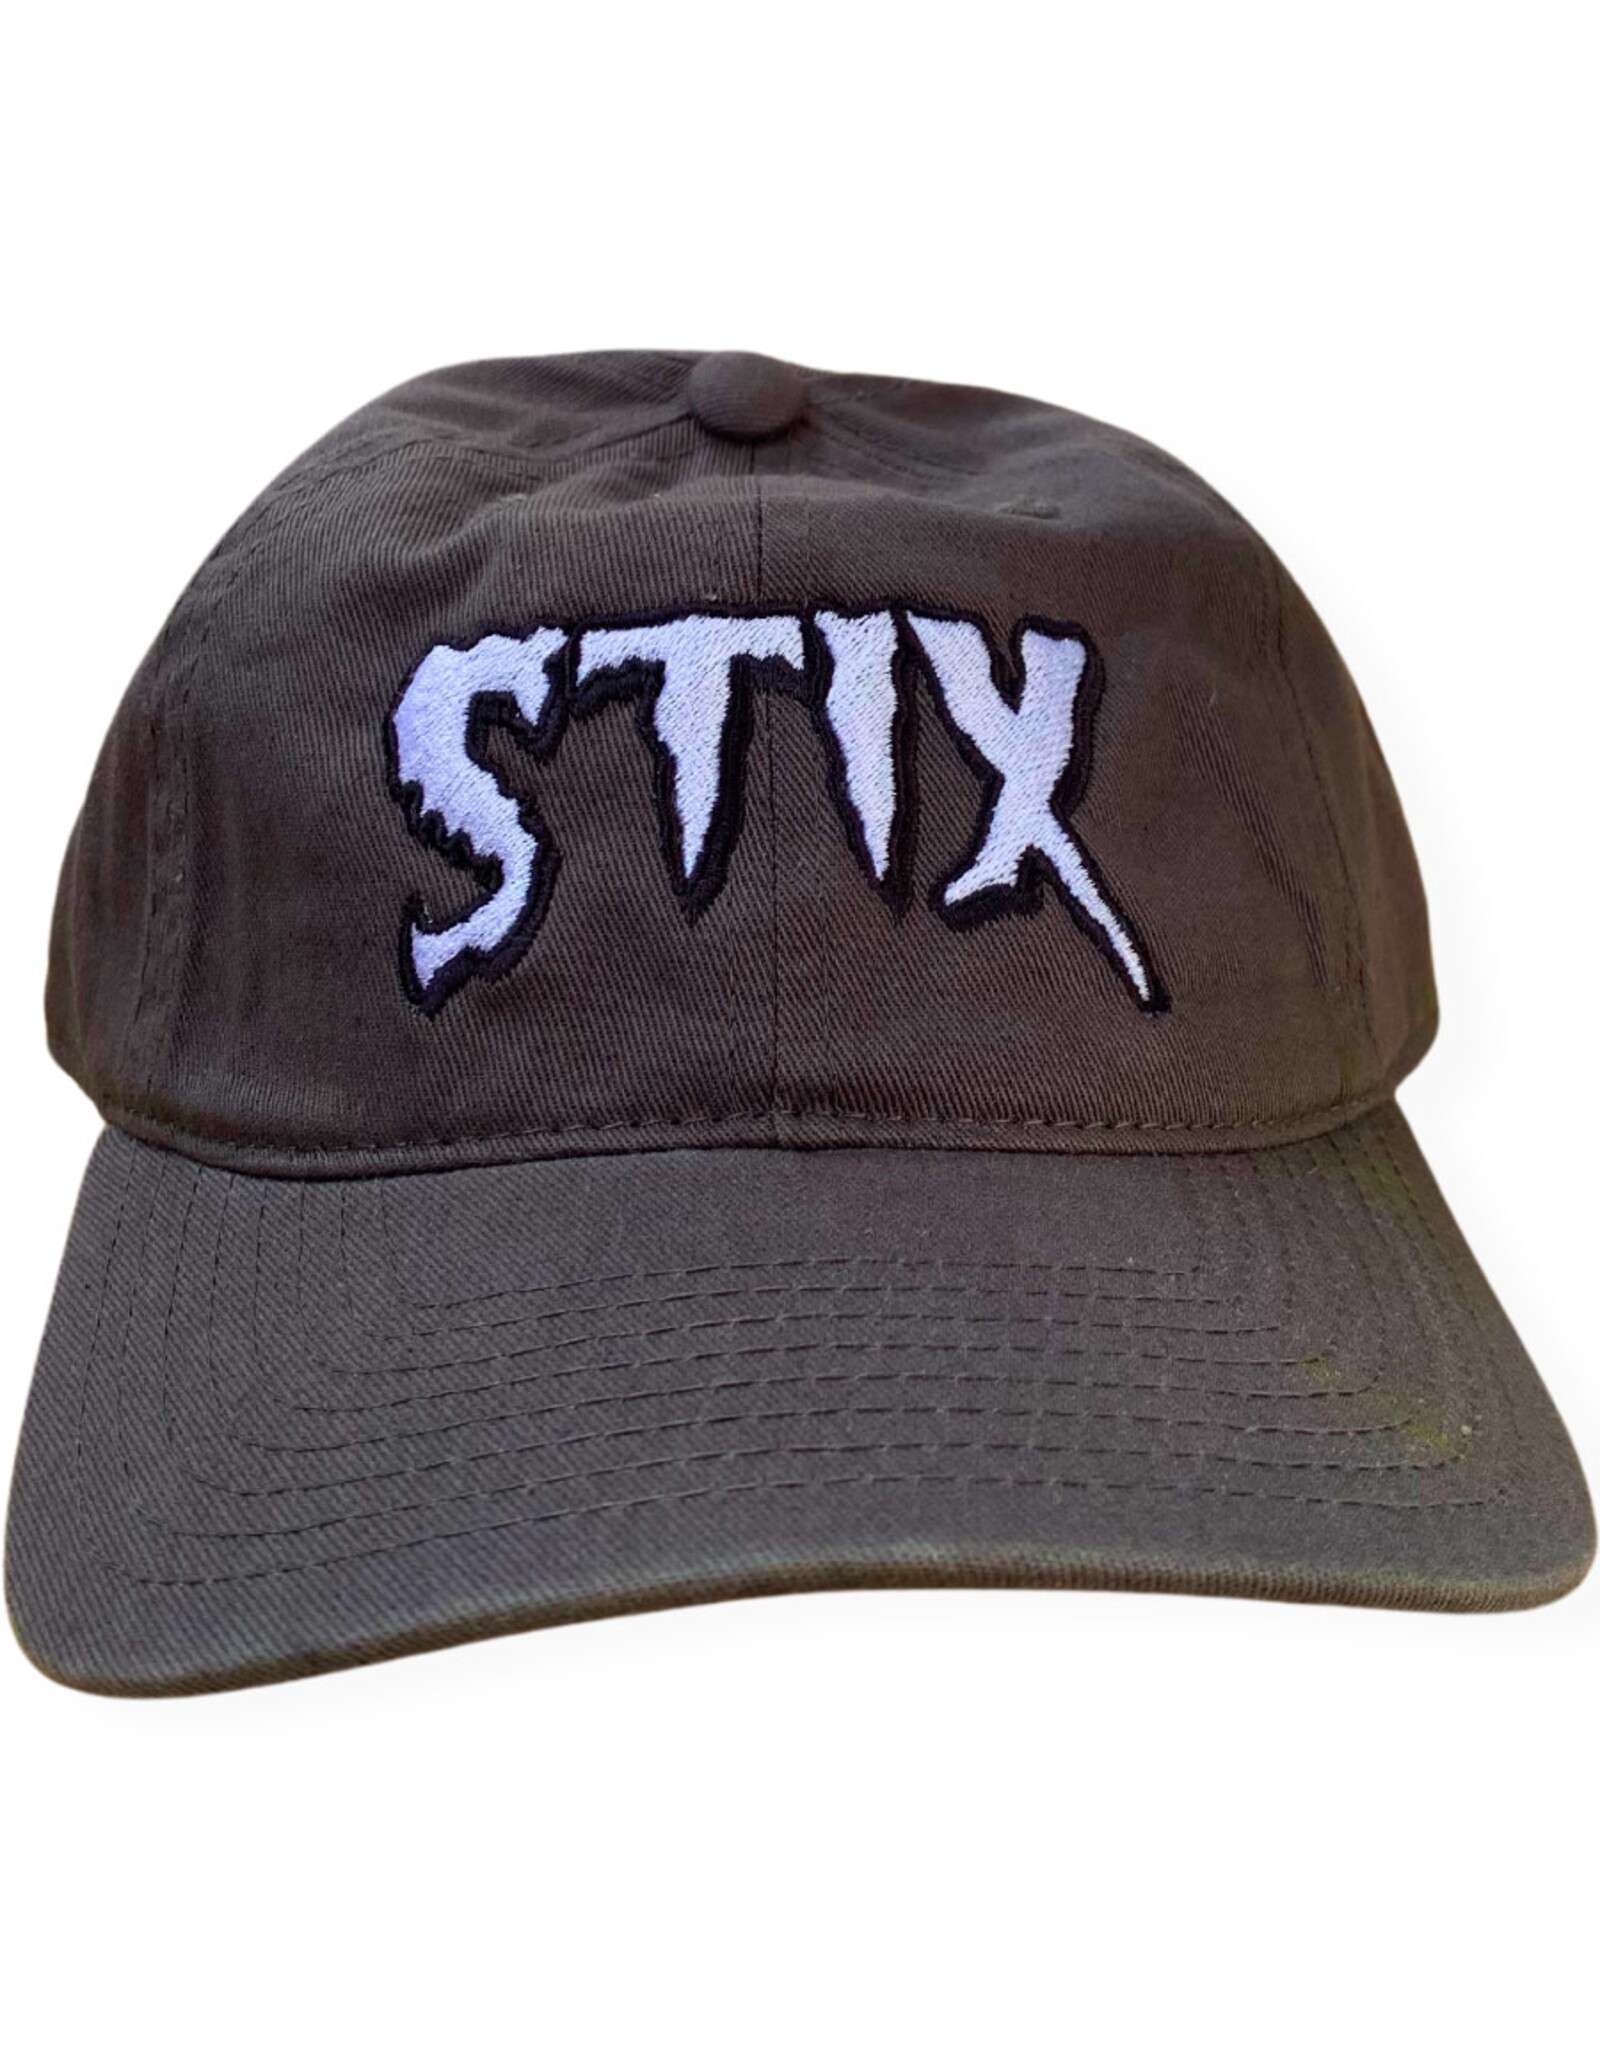 Stix SGV Stix Hat Bad People Strapback (Charcoal/White/Black)